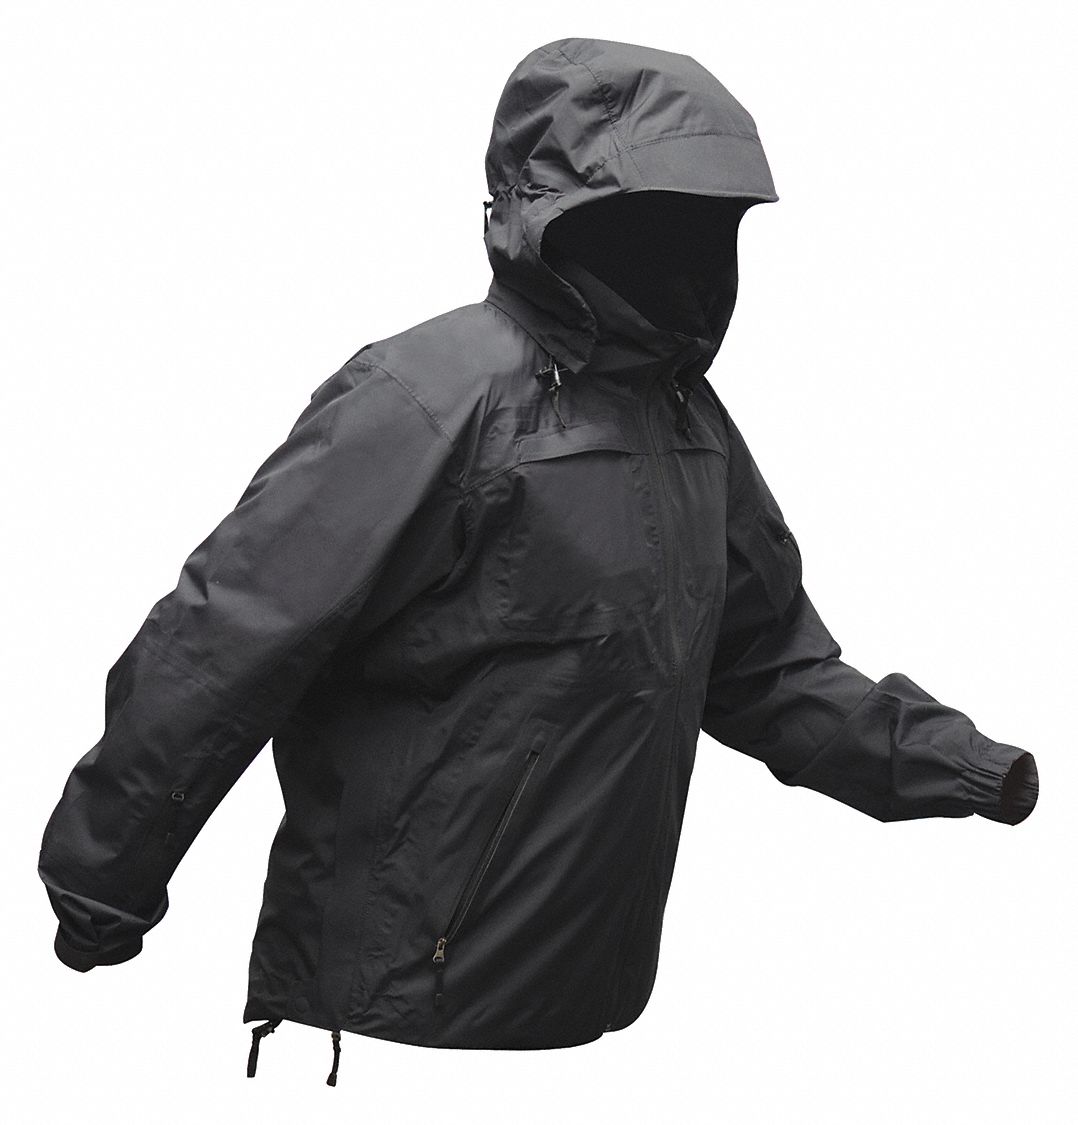 Windtex Rain Jacket Long Sleeve Black M 